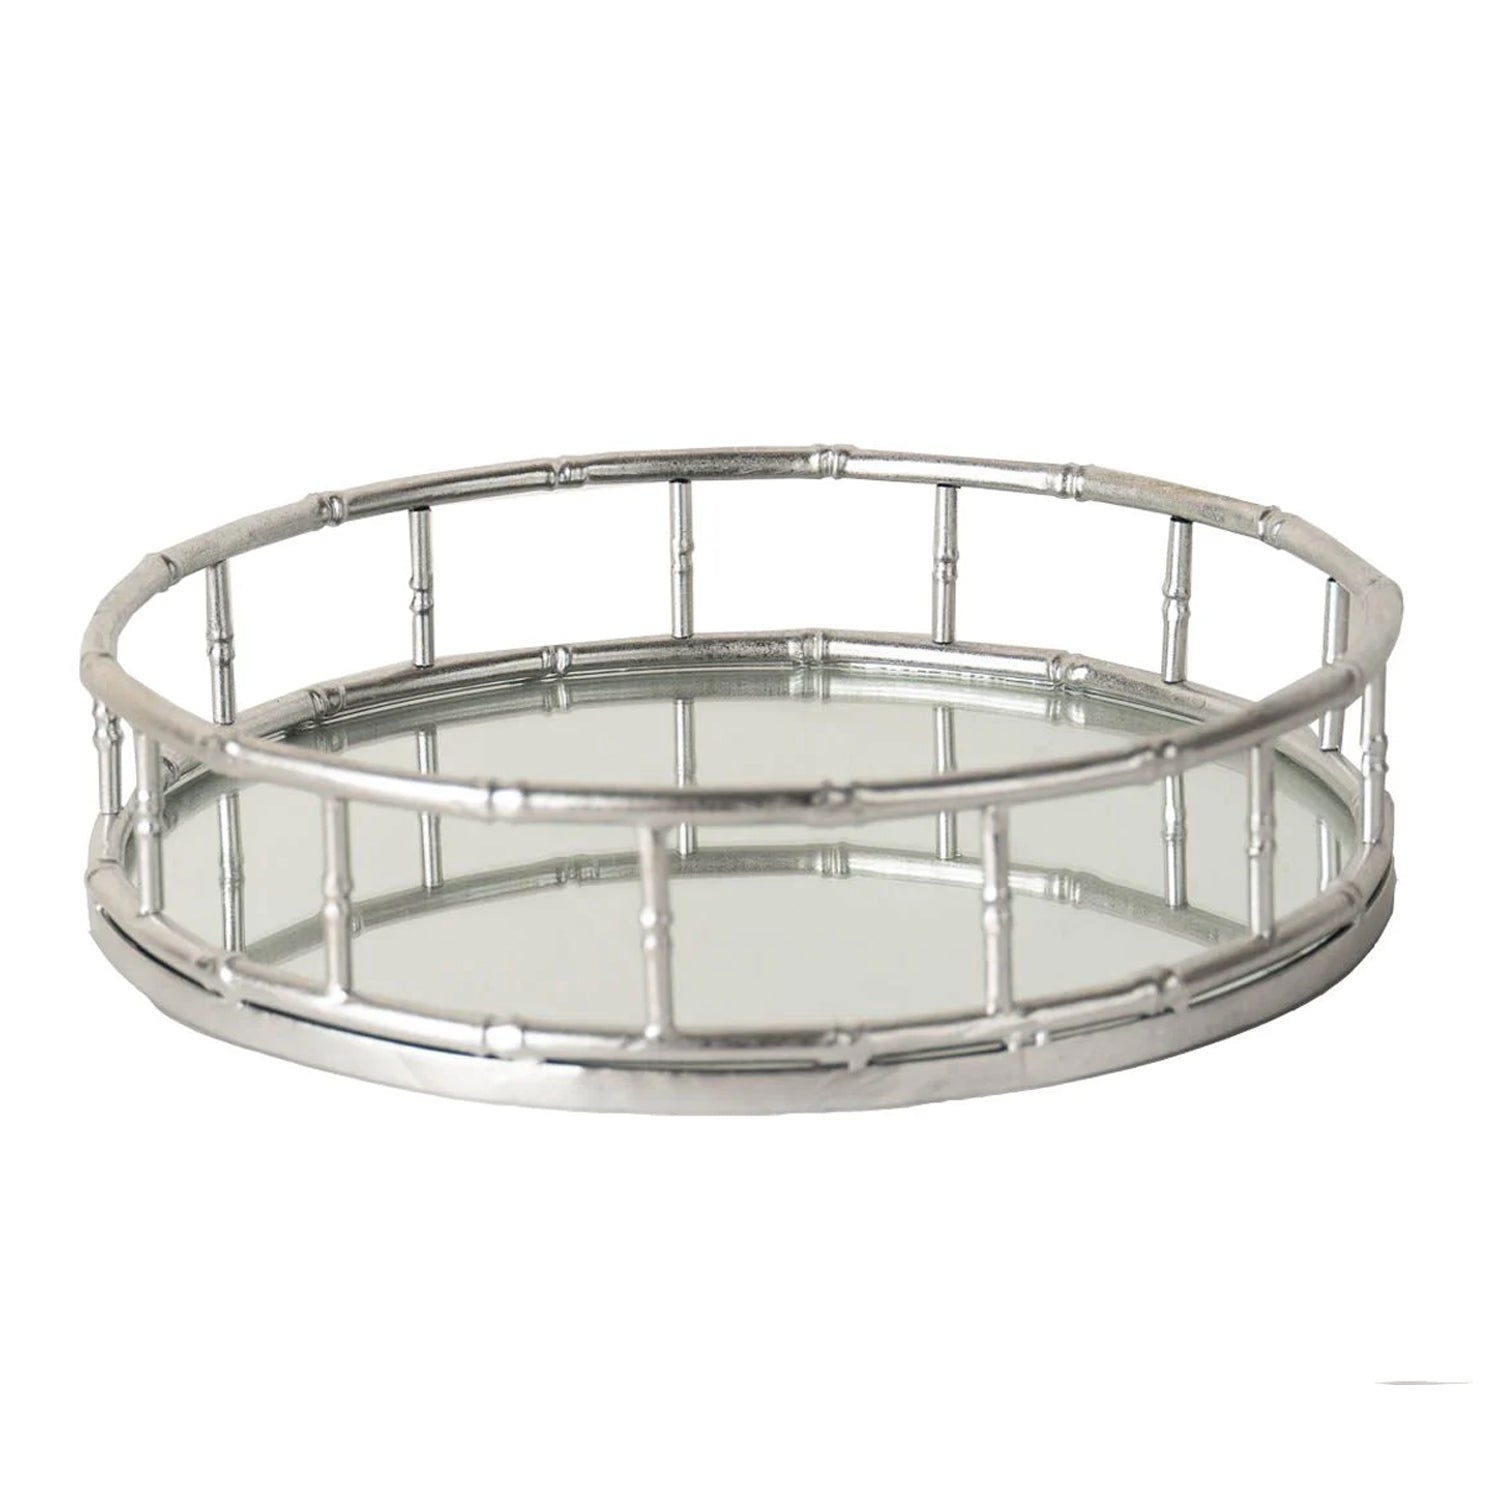 Silver mirrored circular tray